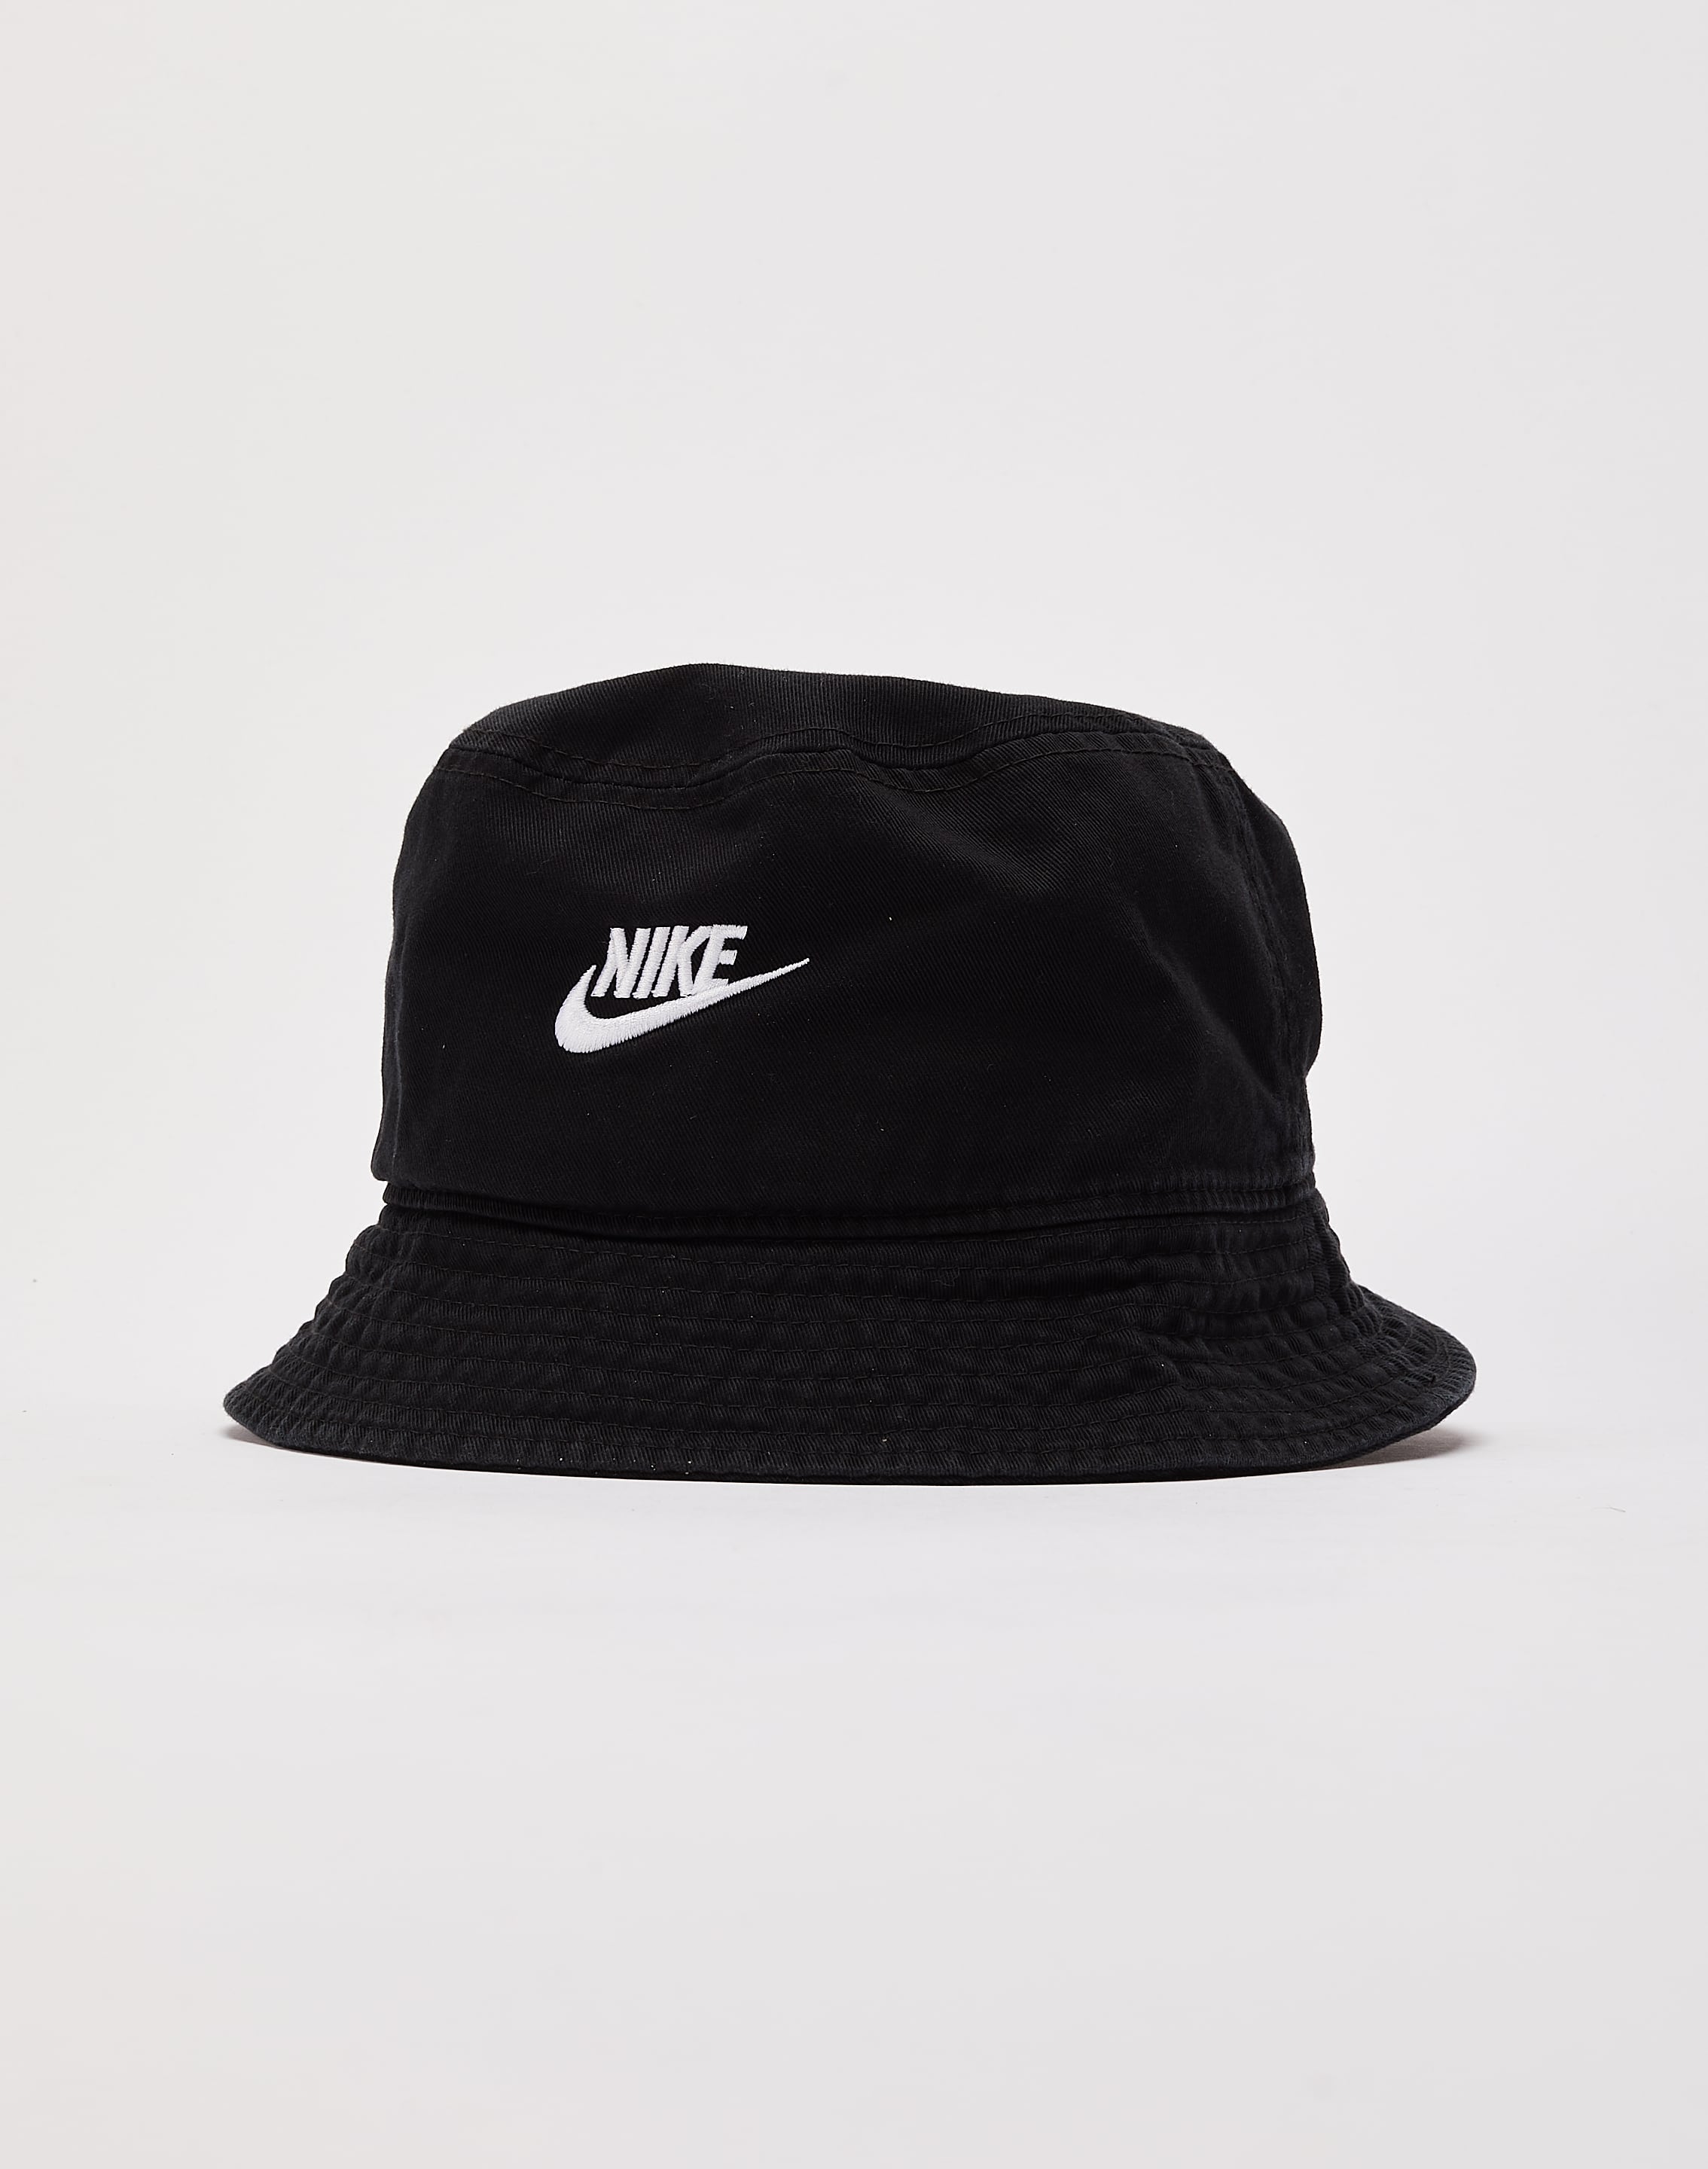 Nike Bucket Hat (Black)